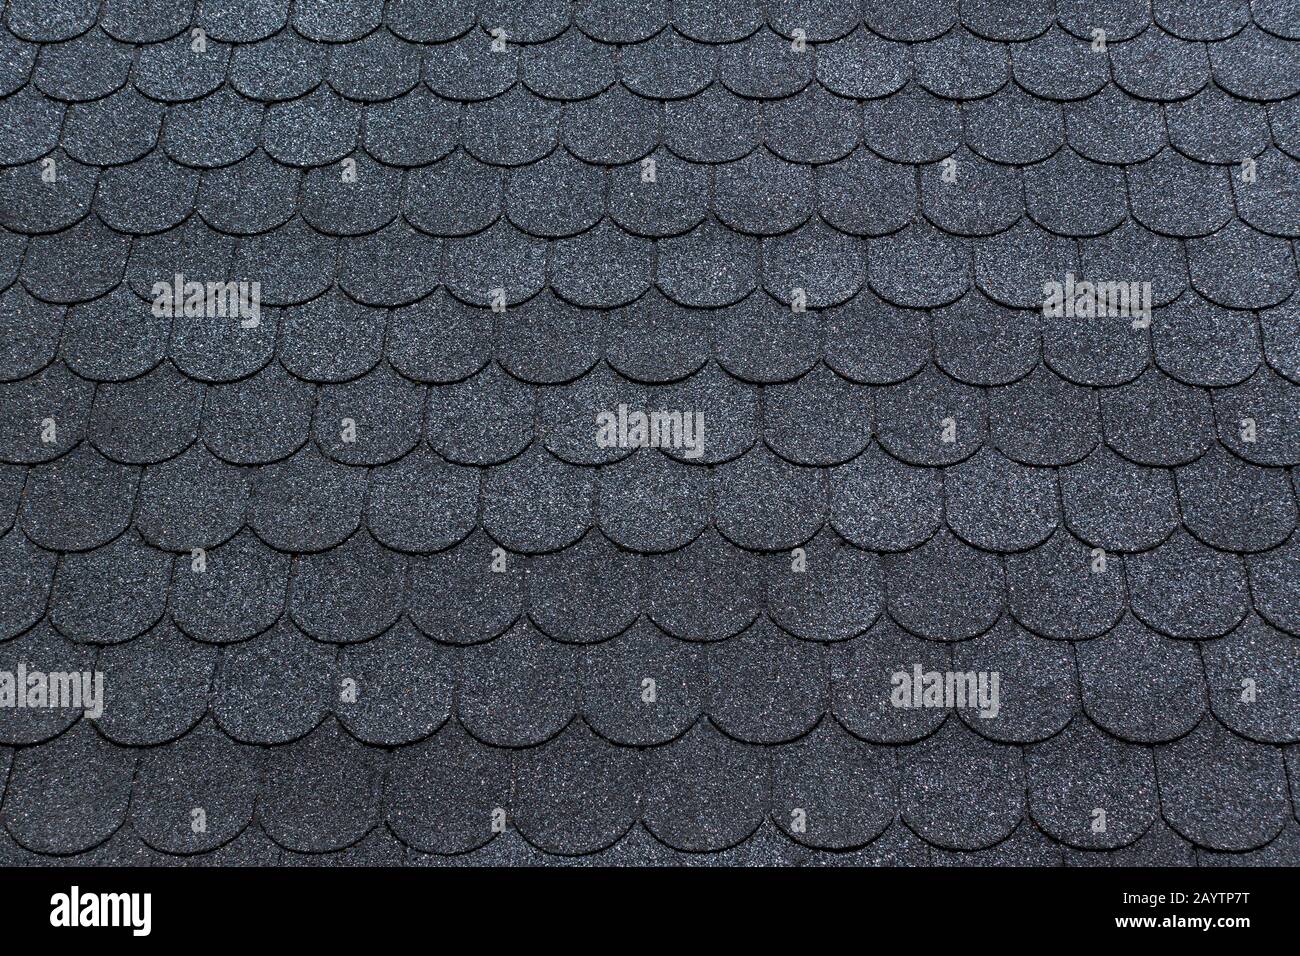 Black bitumen roof shingles with beaver tail pattern Stock Photo